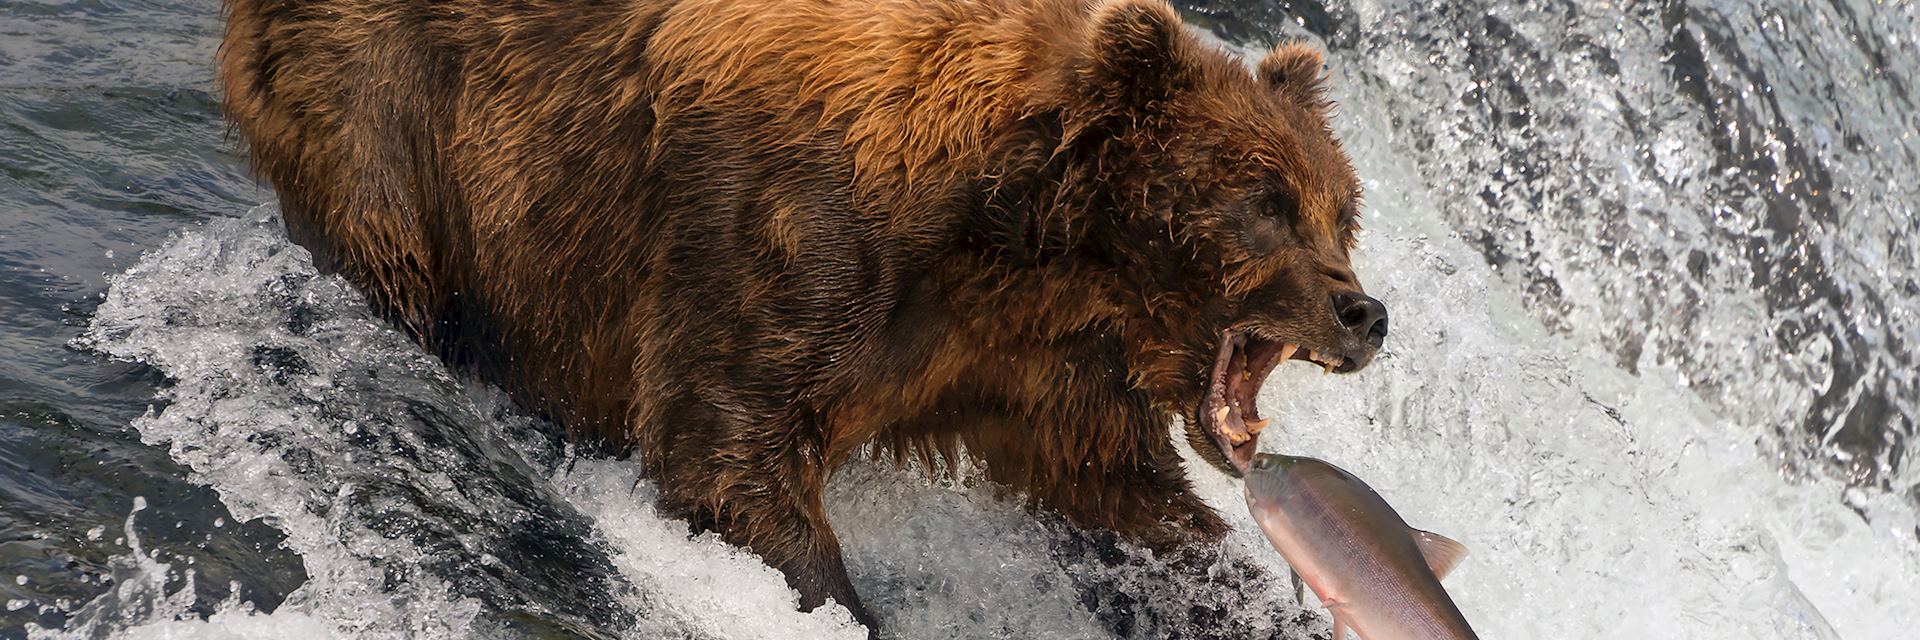 Grizzly bear, Brooks Falls, Alaska